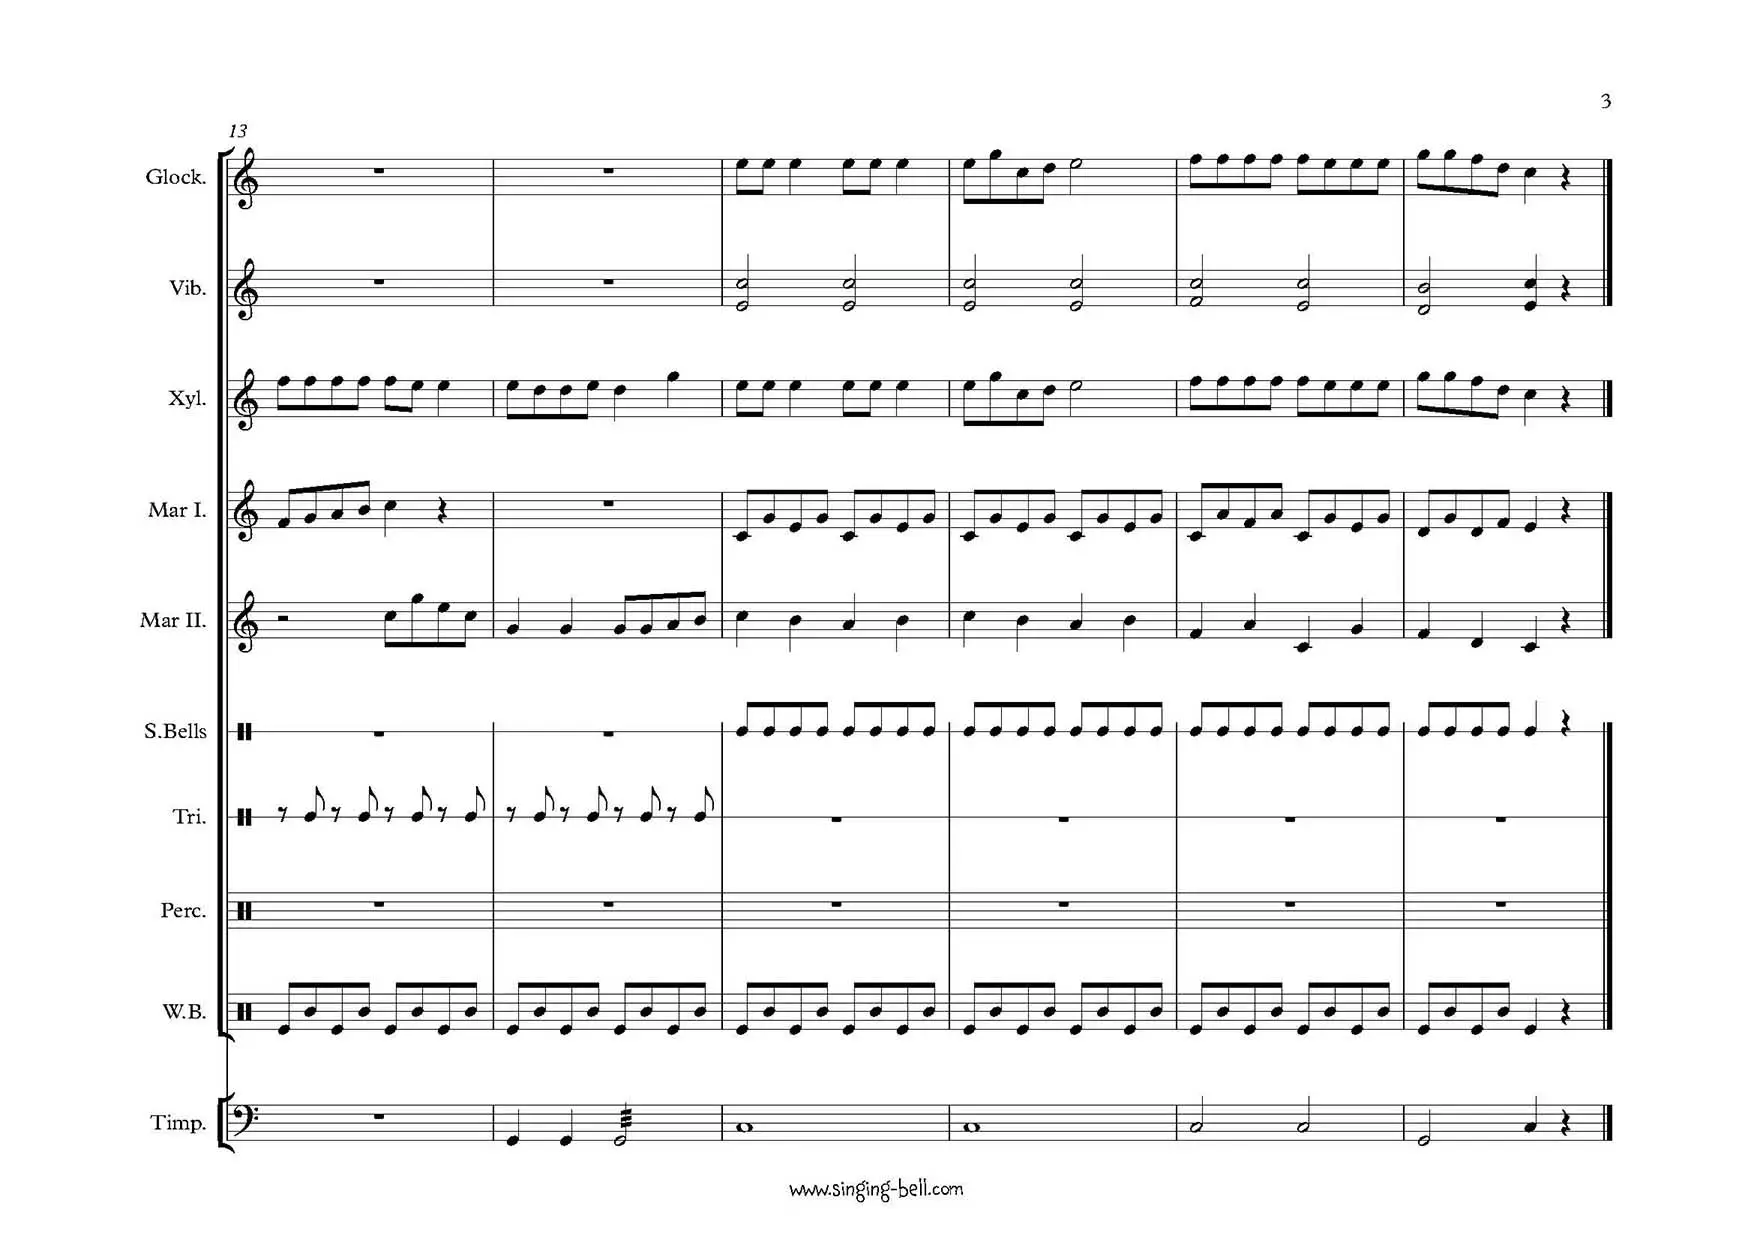 Jingle Bells mallets percussion ensemble orff arrangement sheet music page 3